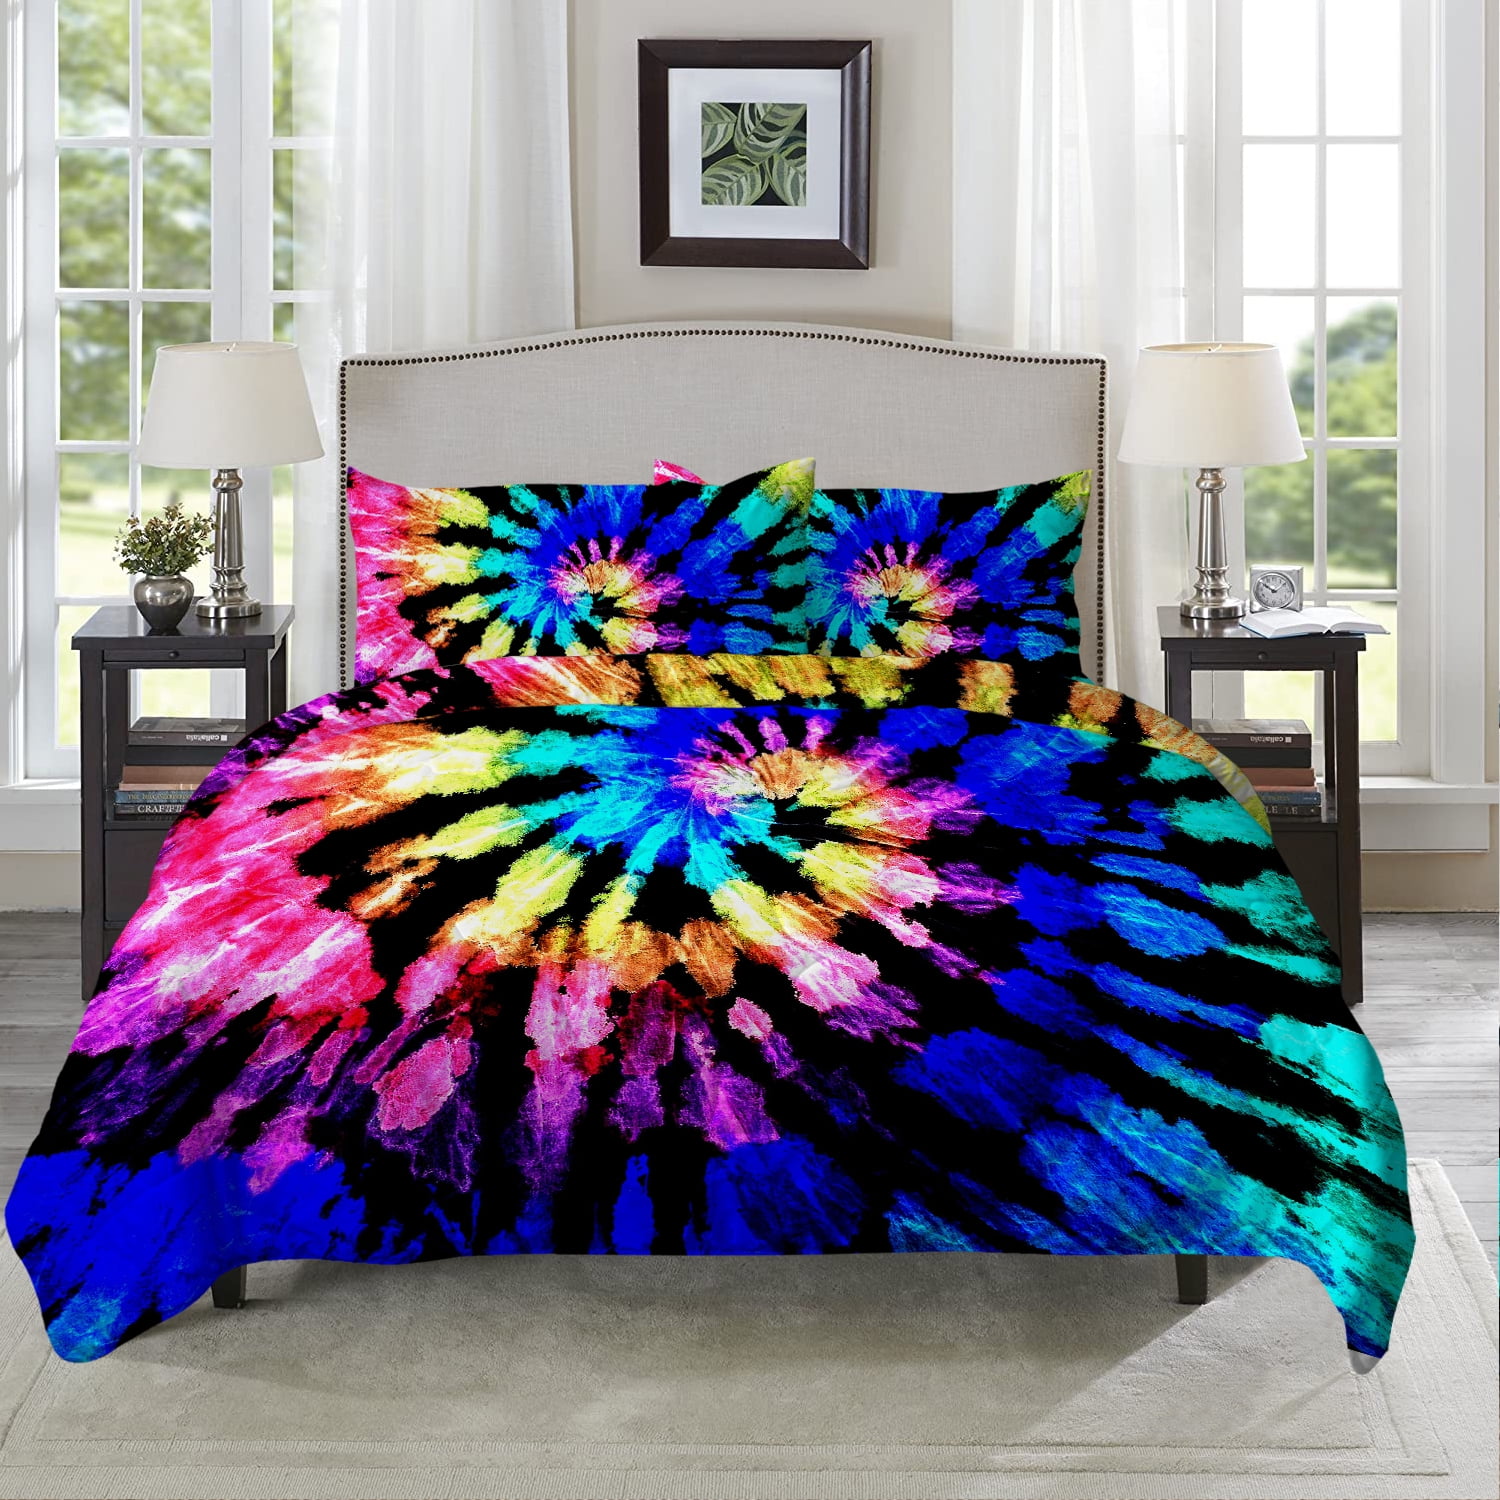 Twin Size Comforter Bedding Set, Tie Dye Bedding Twin Size